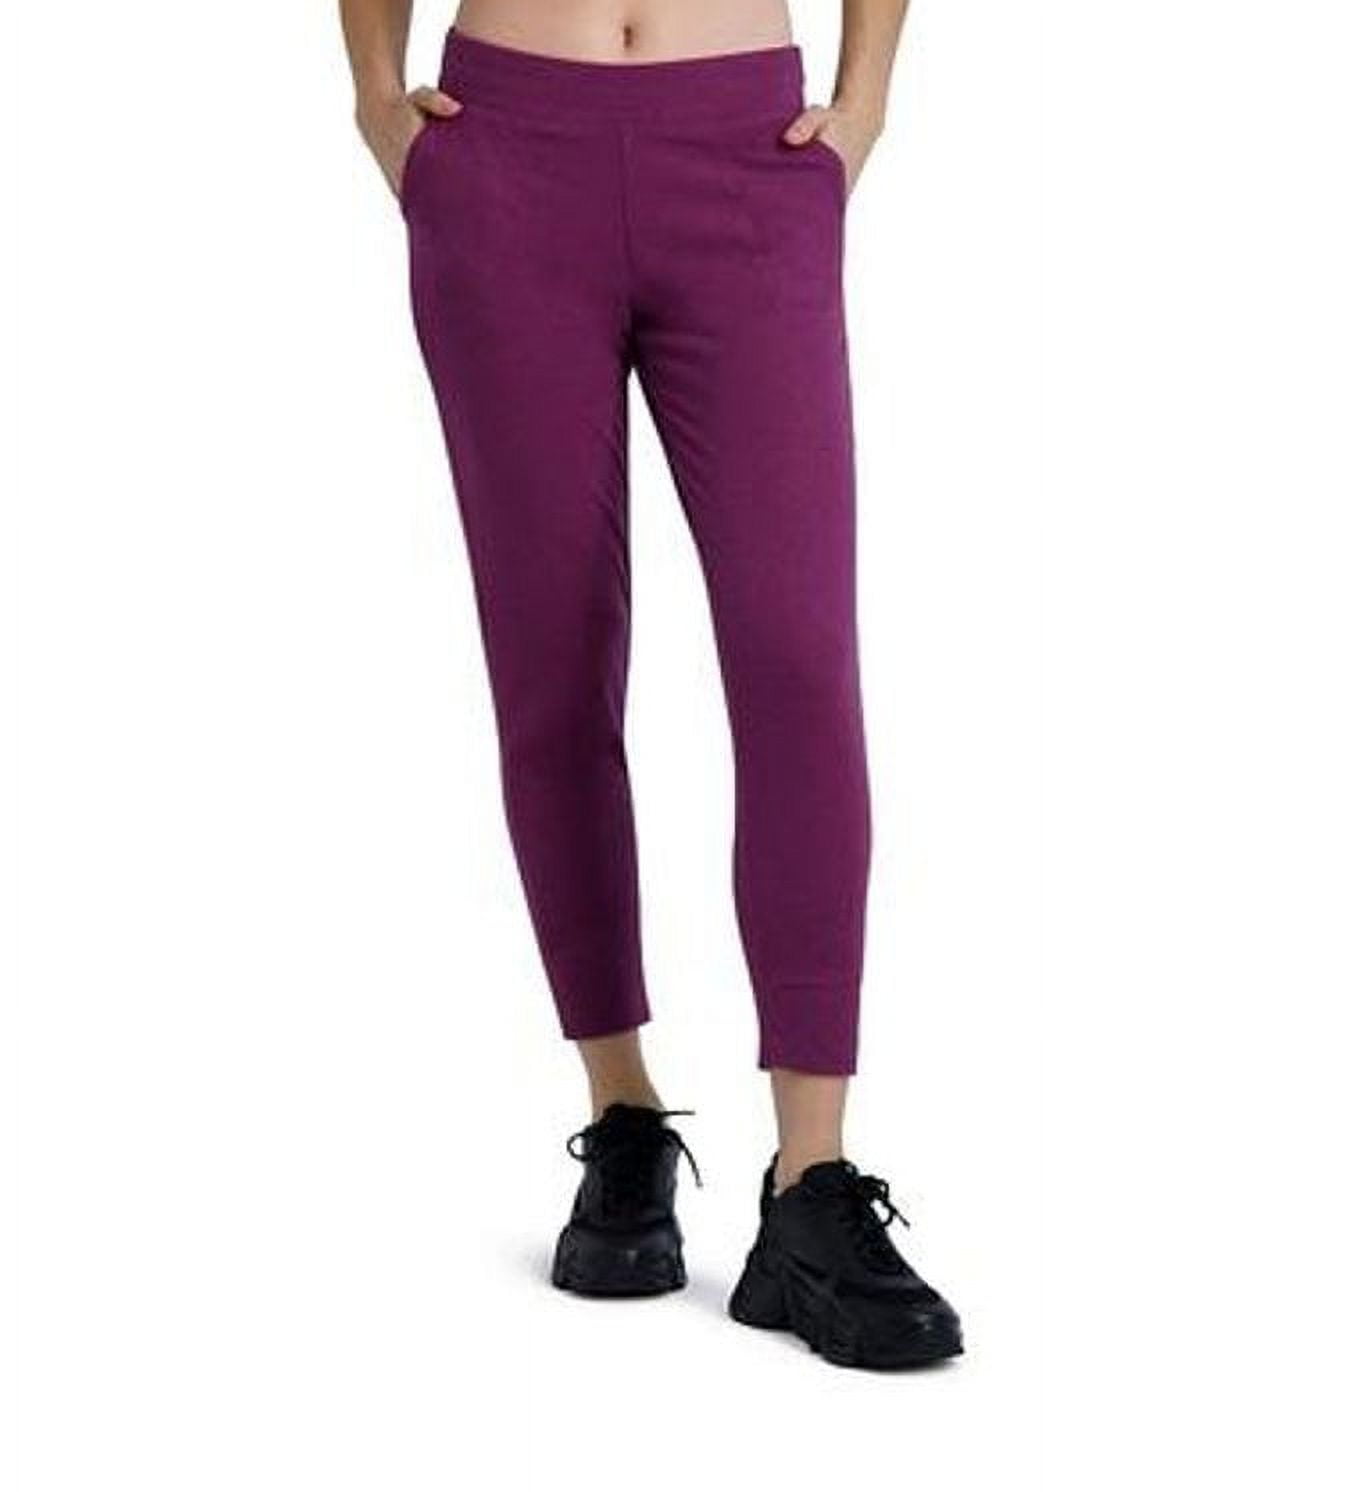 Women's Gaiam Asana Knit Jogger Pants Purple Size XXL